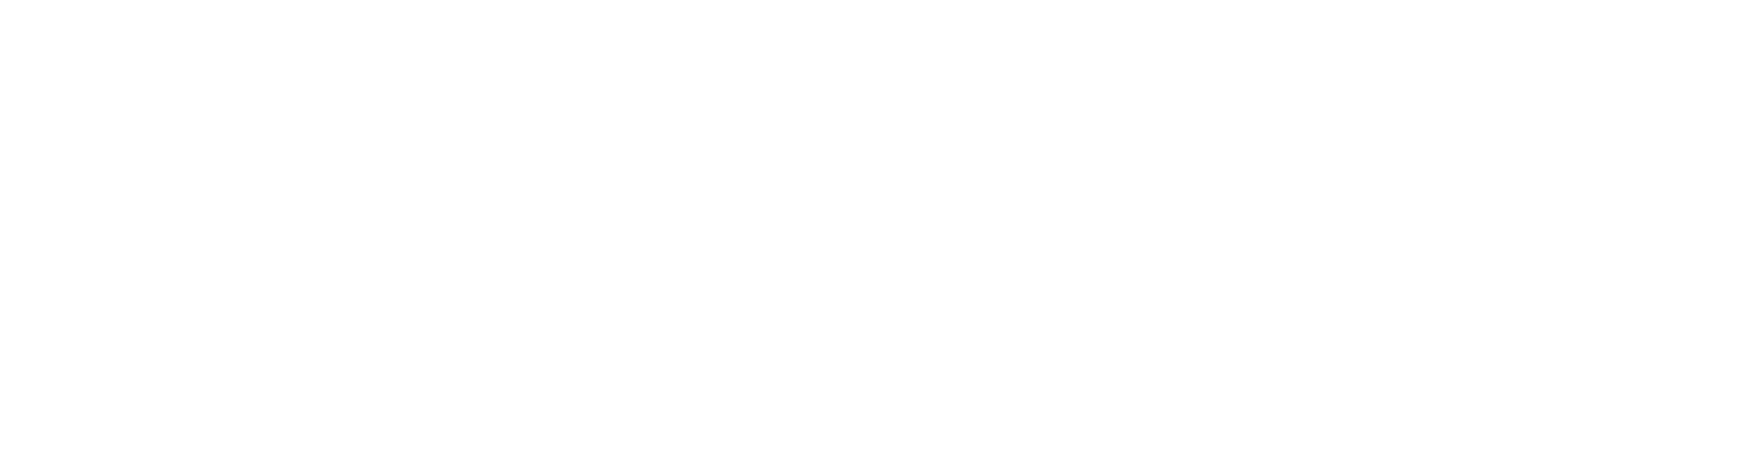 Vibey Desert